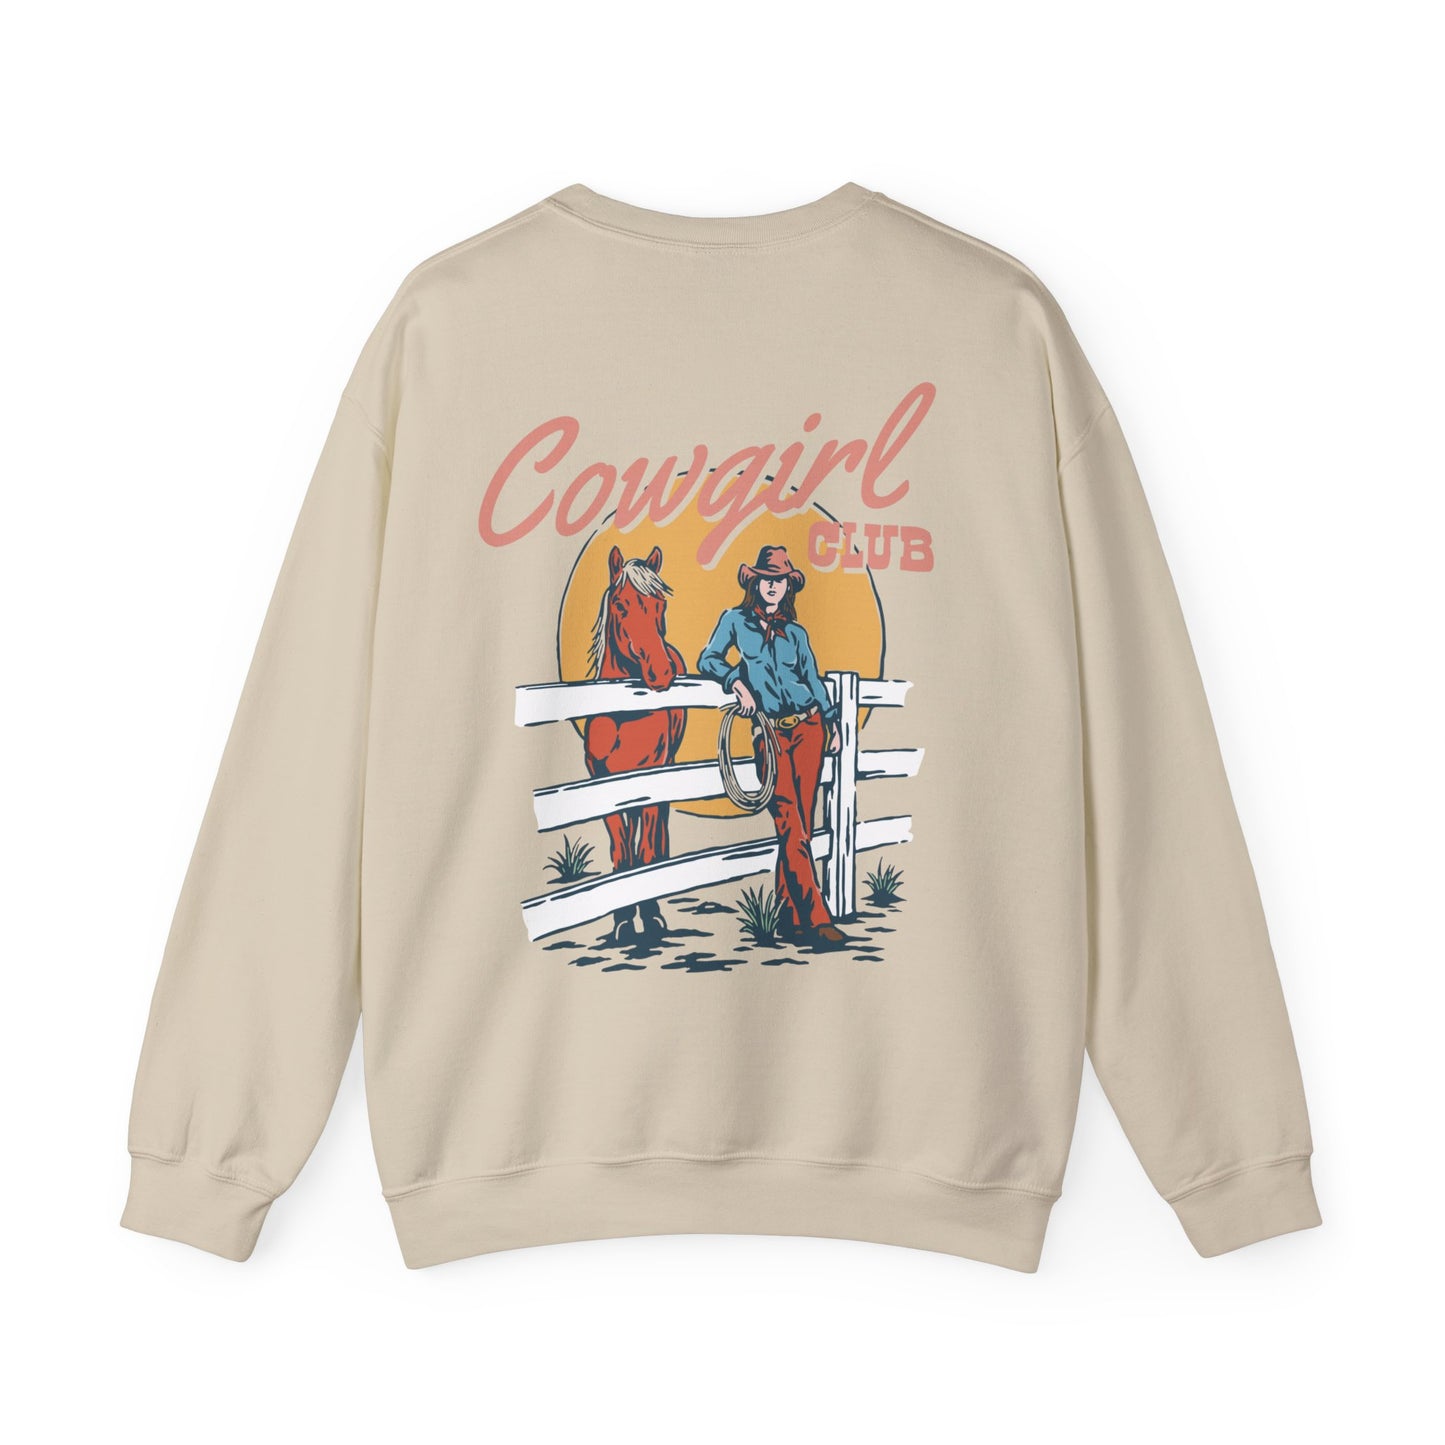 Cowgirl Club | Unisex Sweatshirt with Back Print